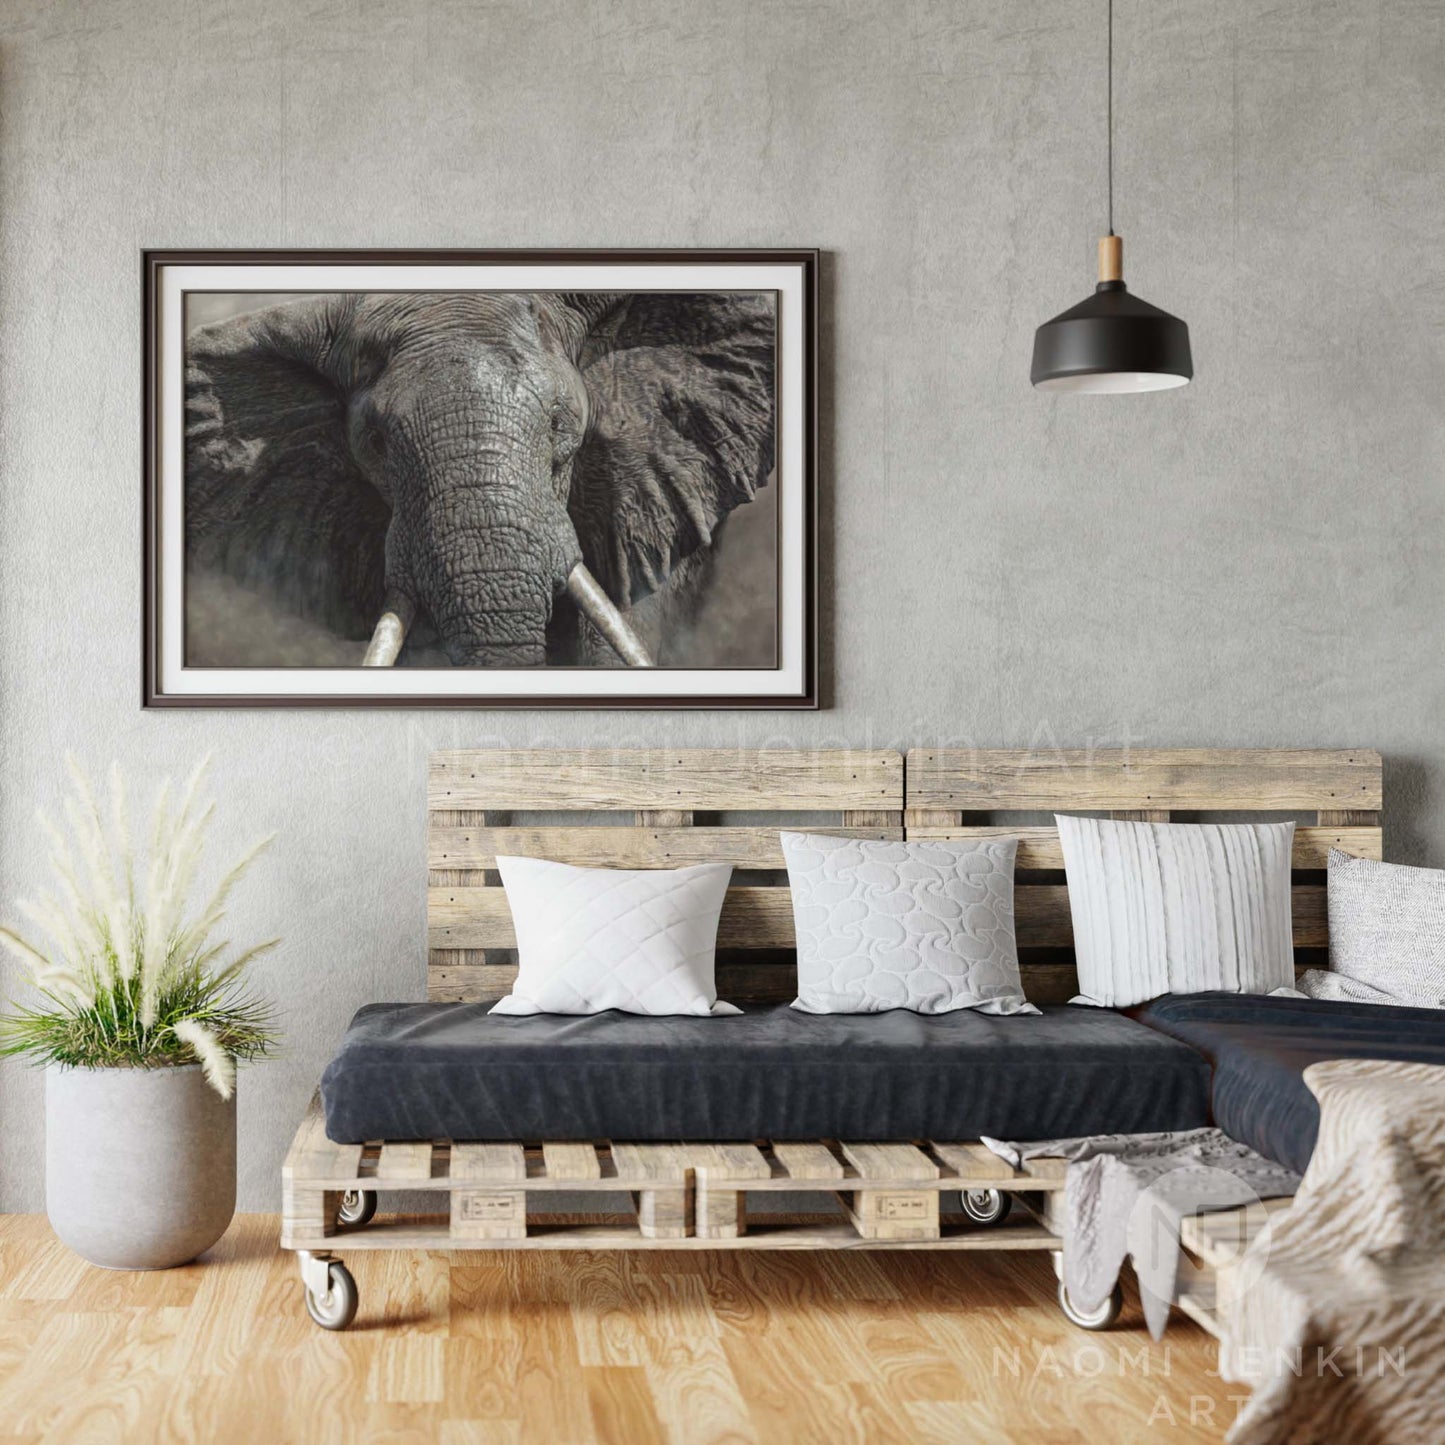 African elephant art print by Naomi Jenkin Art in a living space scene